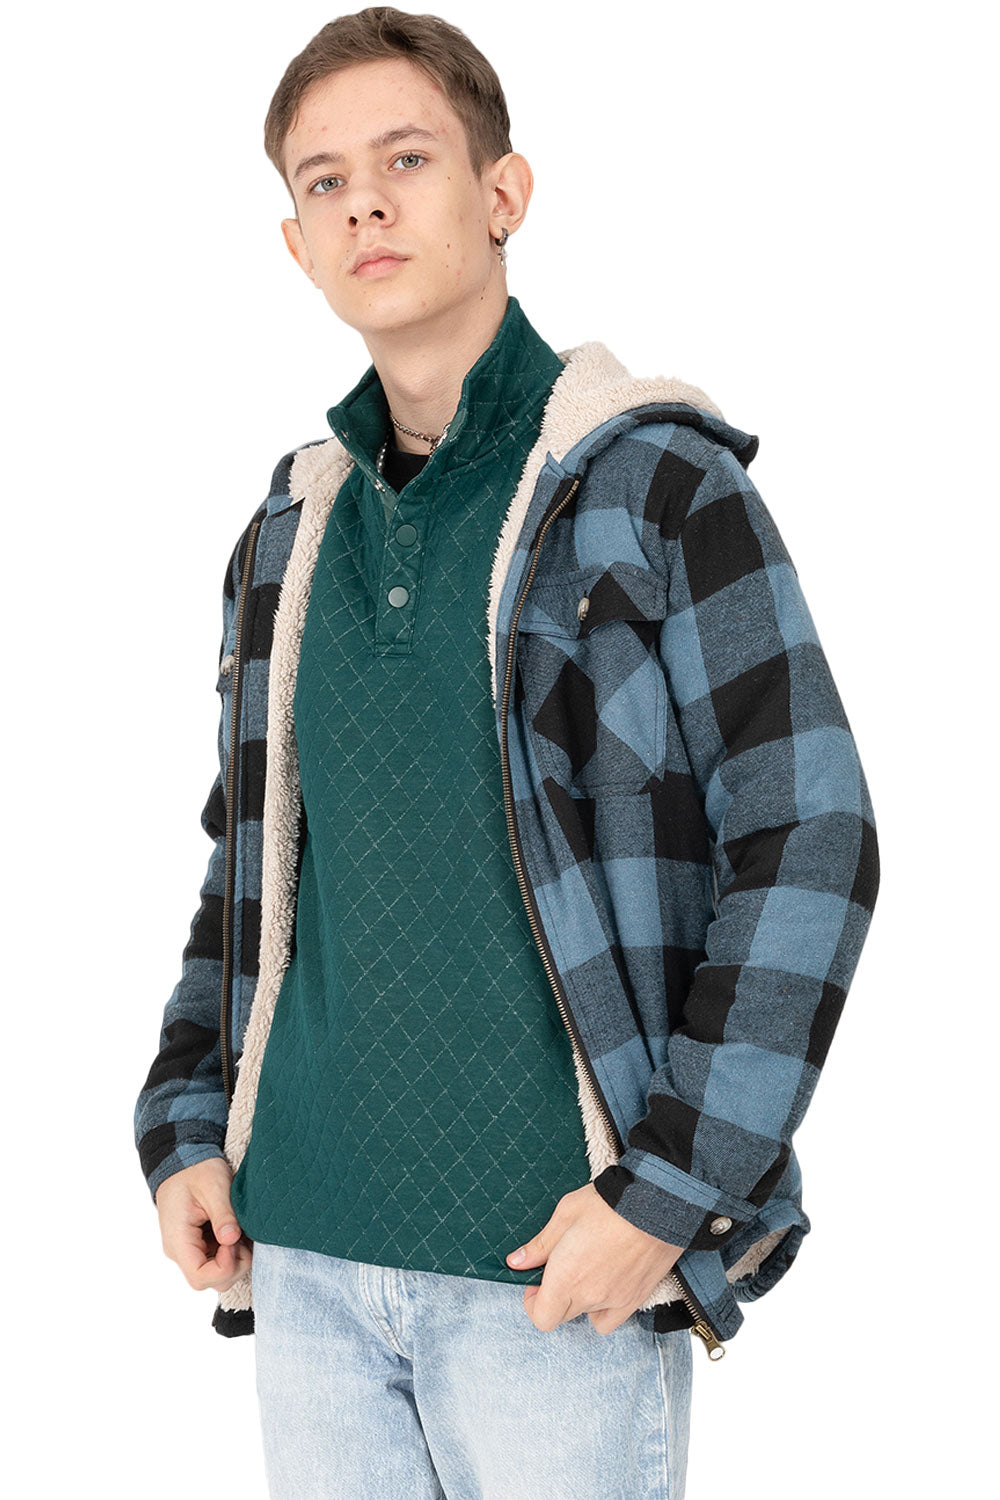 Kids Ultra Soft Quilted 1/4 Snap Fleece Pullover Mountain Outdoor Shirt